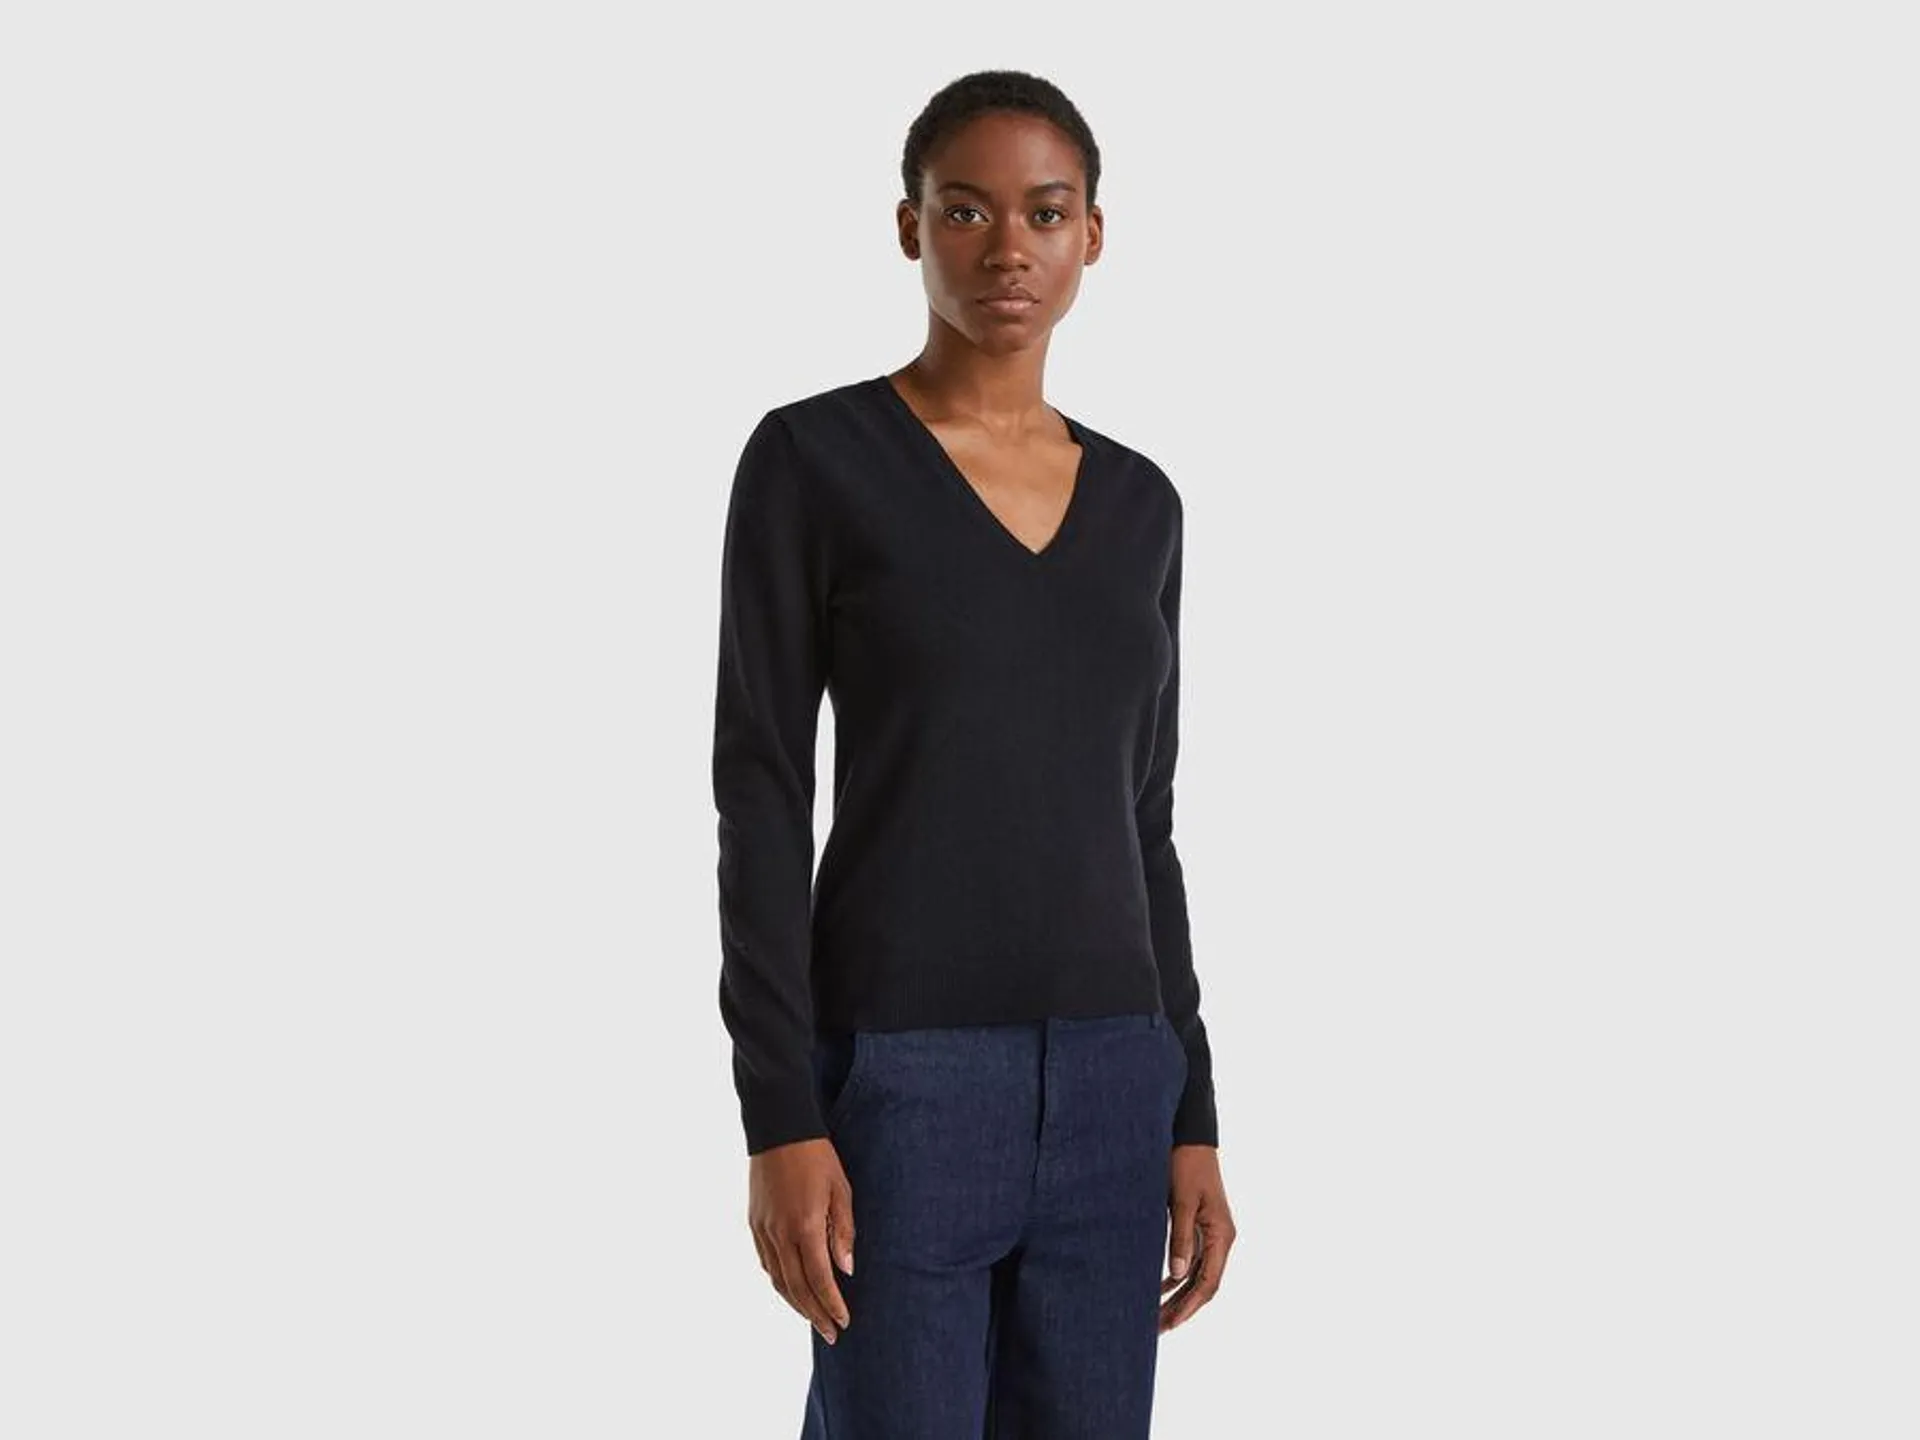 Black V-neck sweater in pure Merino wool